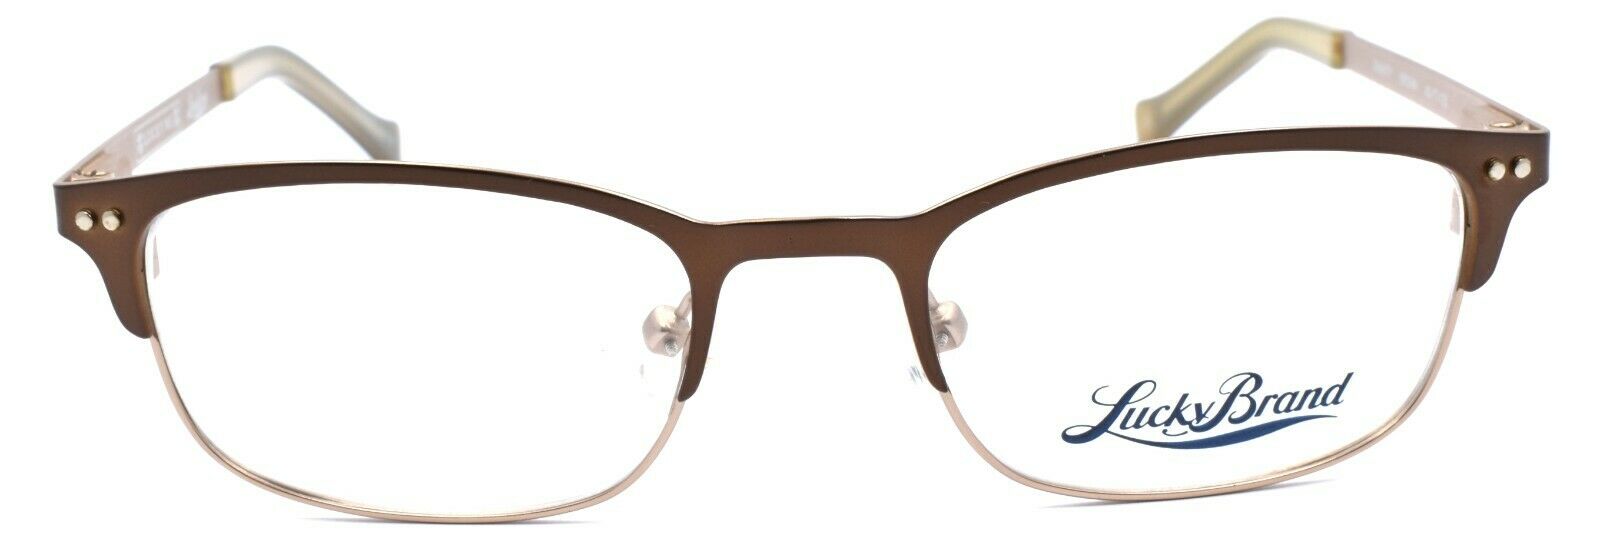 2-LUCKY BRAND Smarty Kids Eyeglasses Frames 45-17-130 Brown-751286246247-IKSpecs